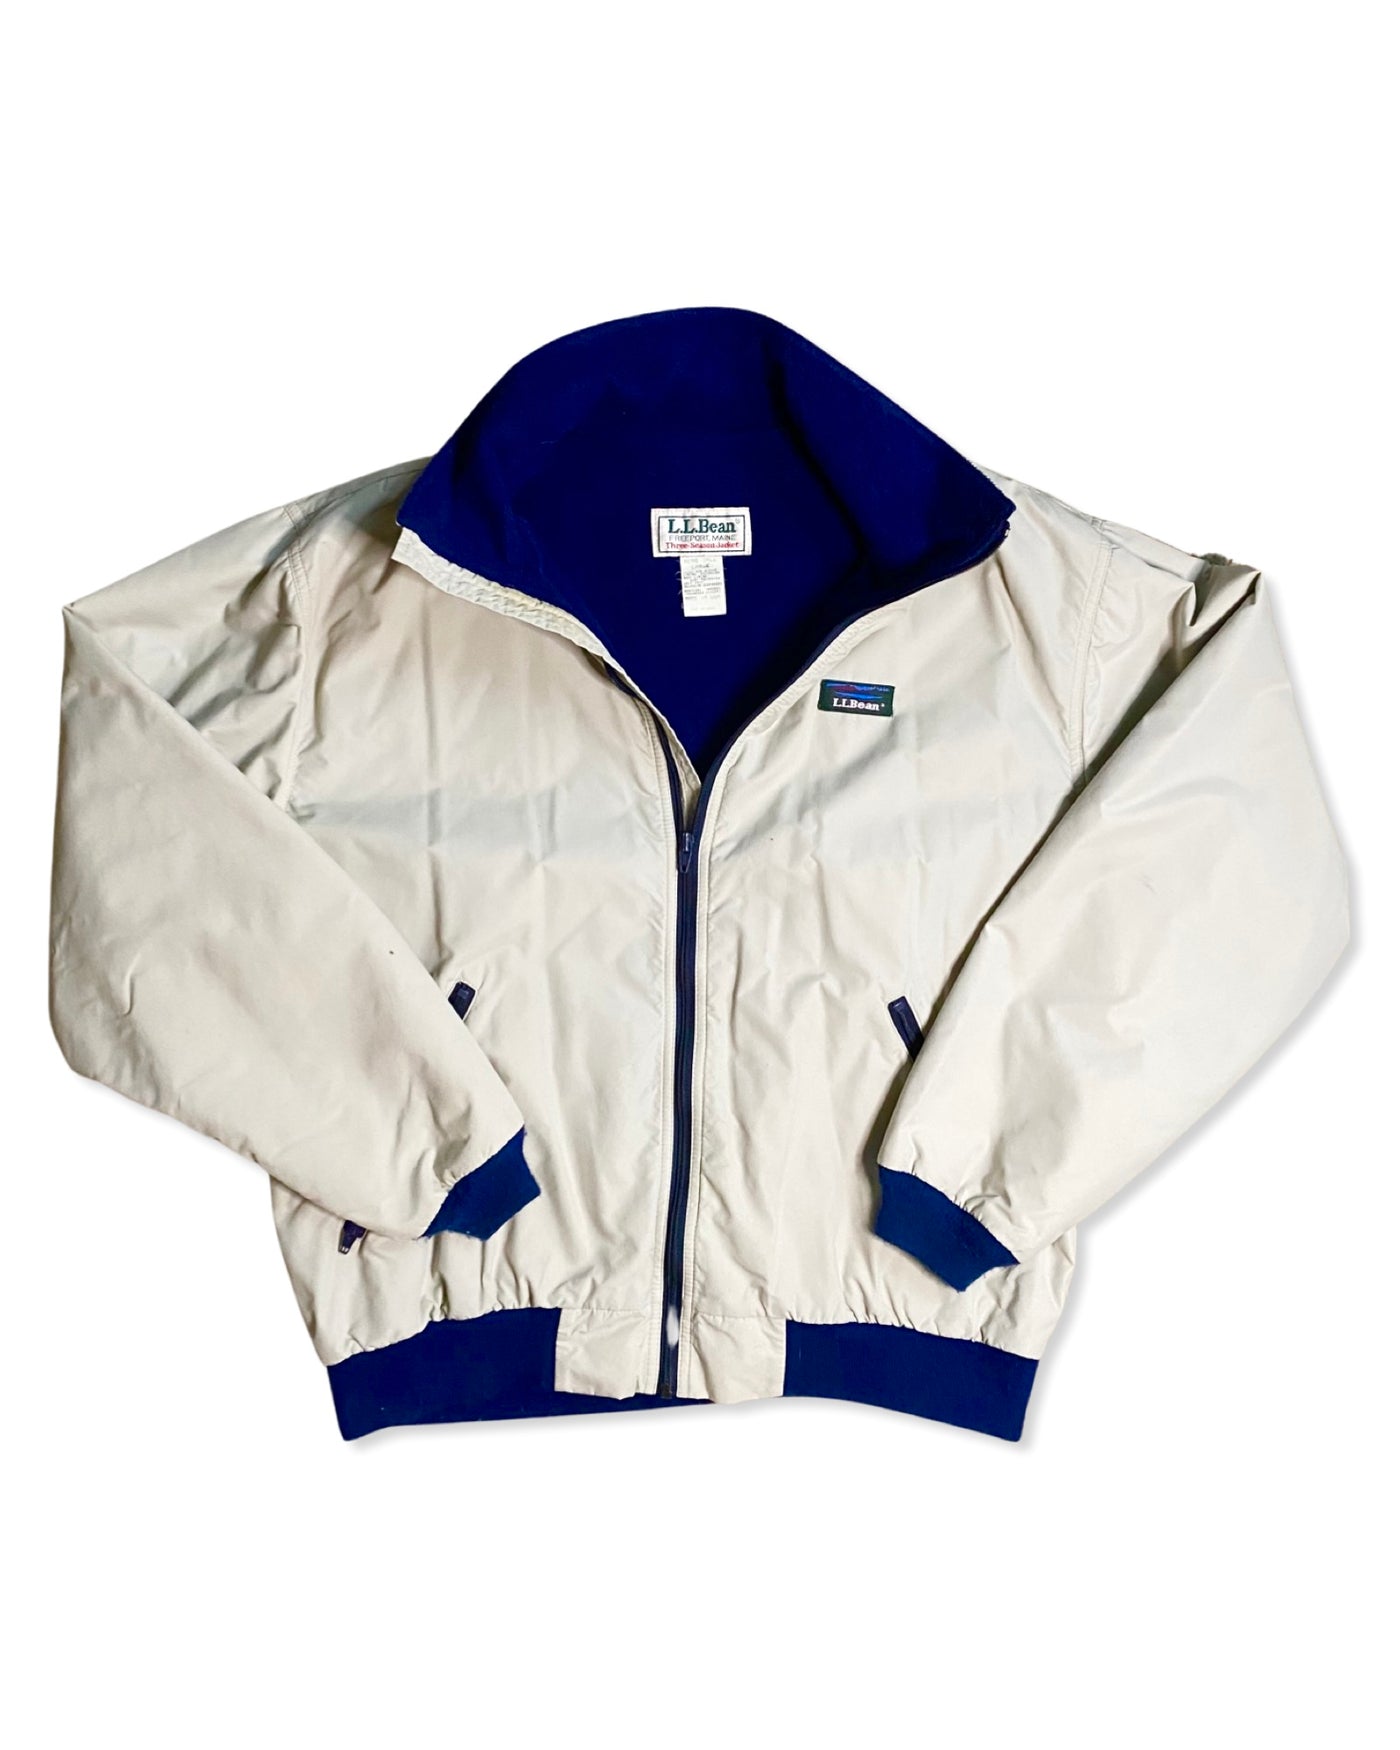 Vintage 80s LL Bean Fleece Lined Warmup Jacket